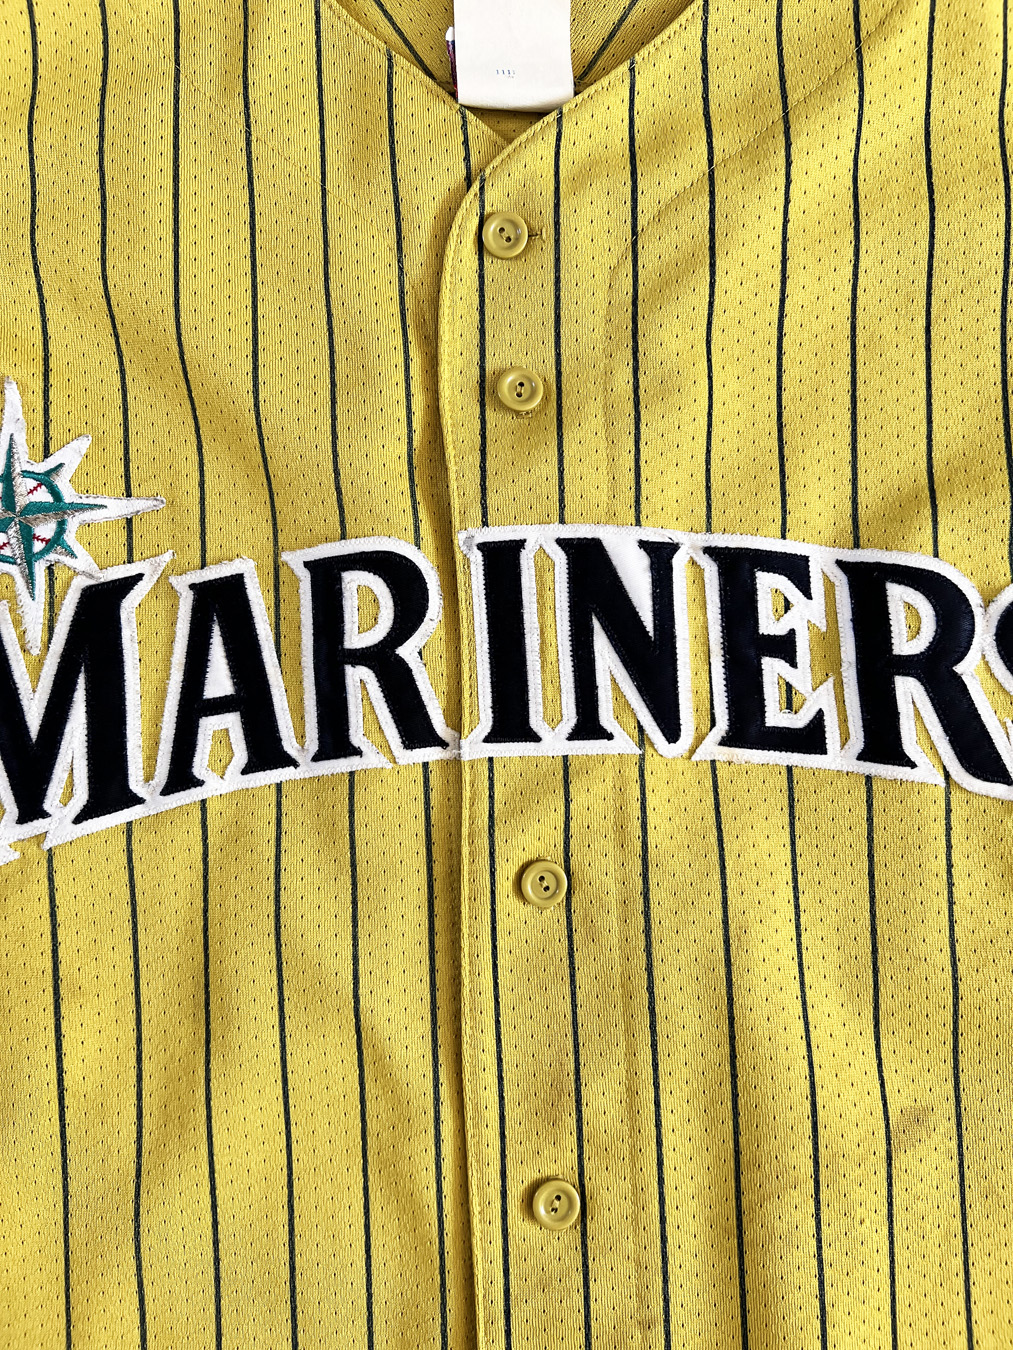 Vintage Seattle Mariners MLB Baseball Jersey Men's XL Sewn RARE GREEN  PINSTRIPE